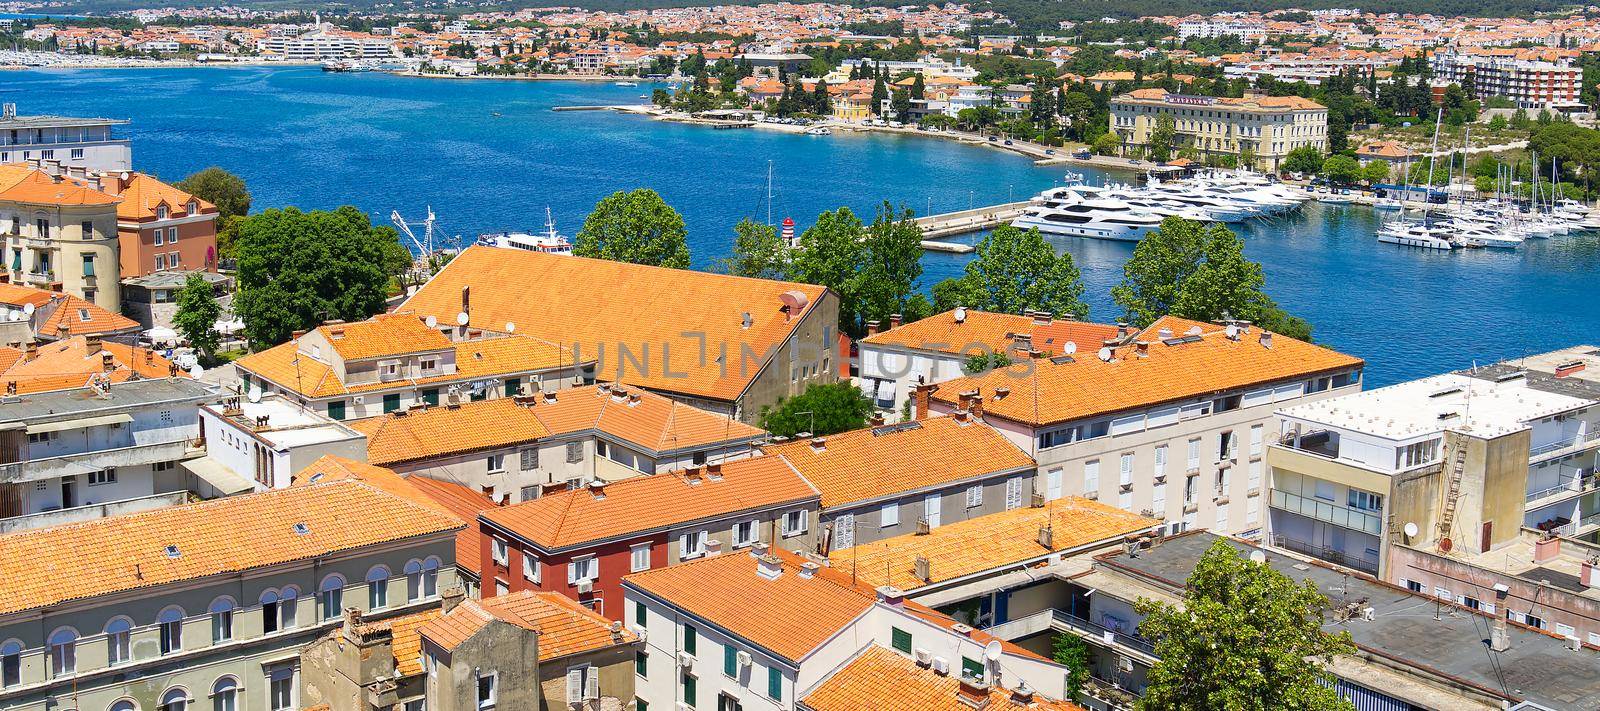 Top view of the zadar old town and sea. Zadar, Croatia.